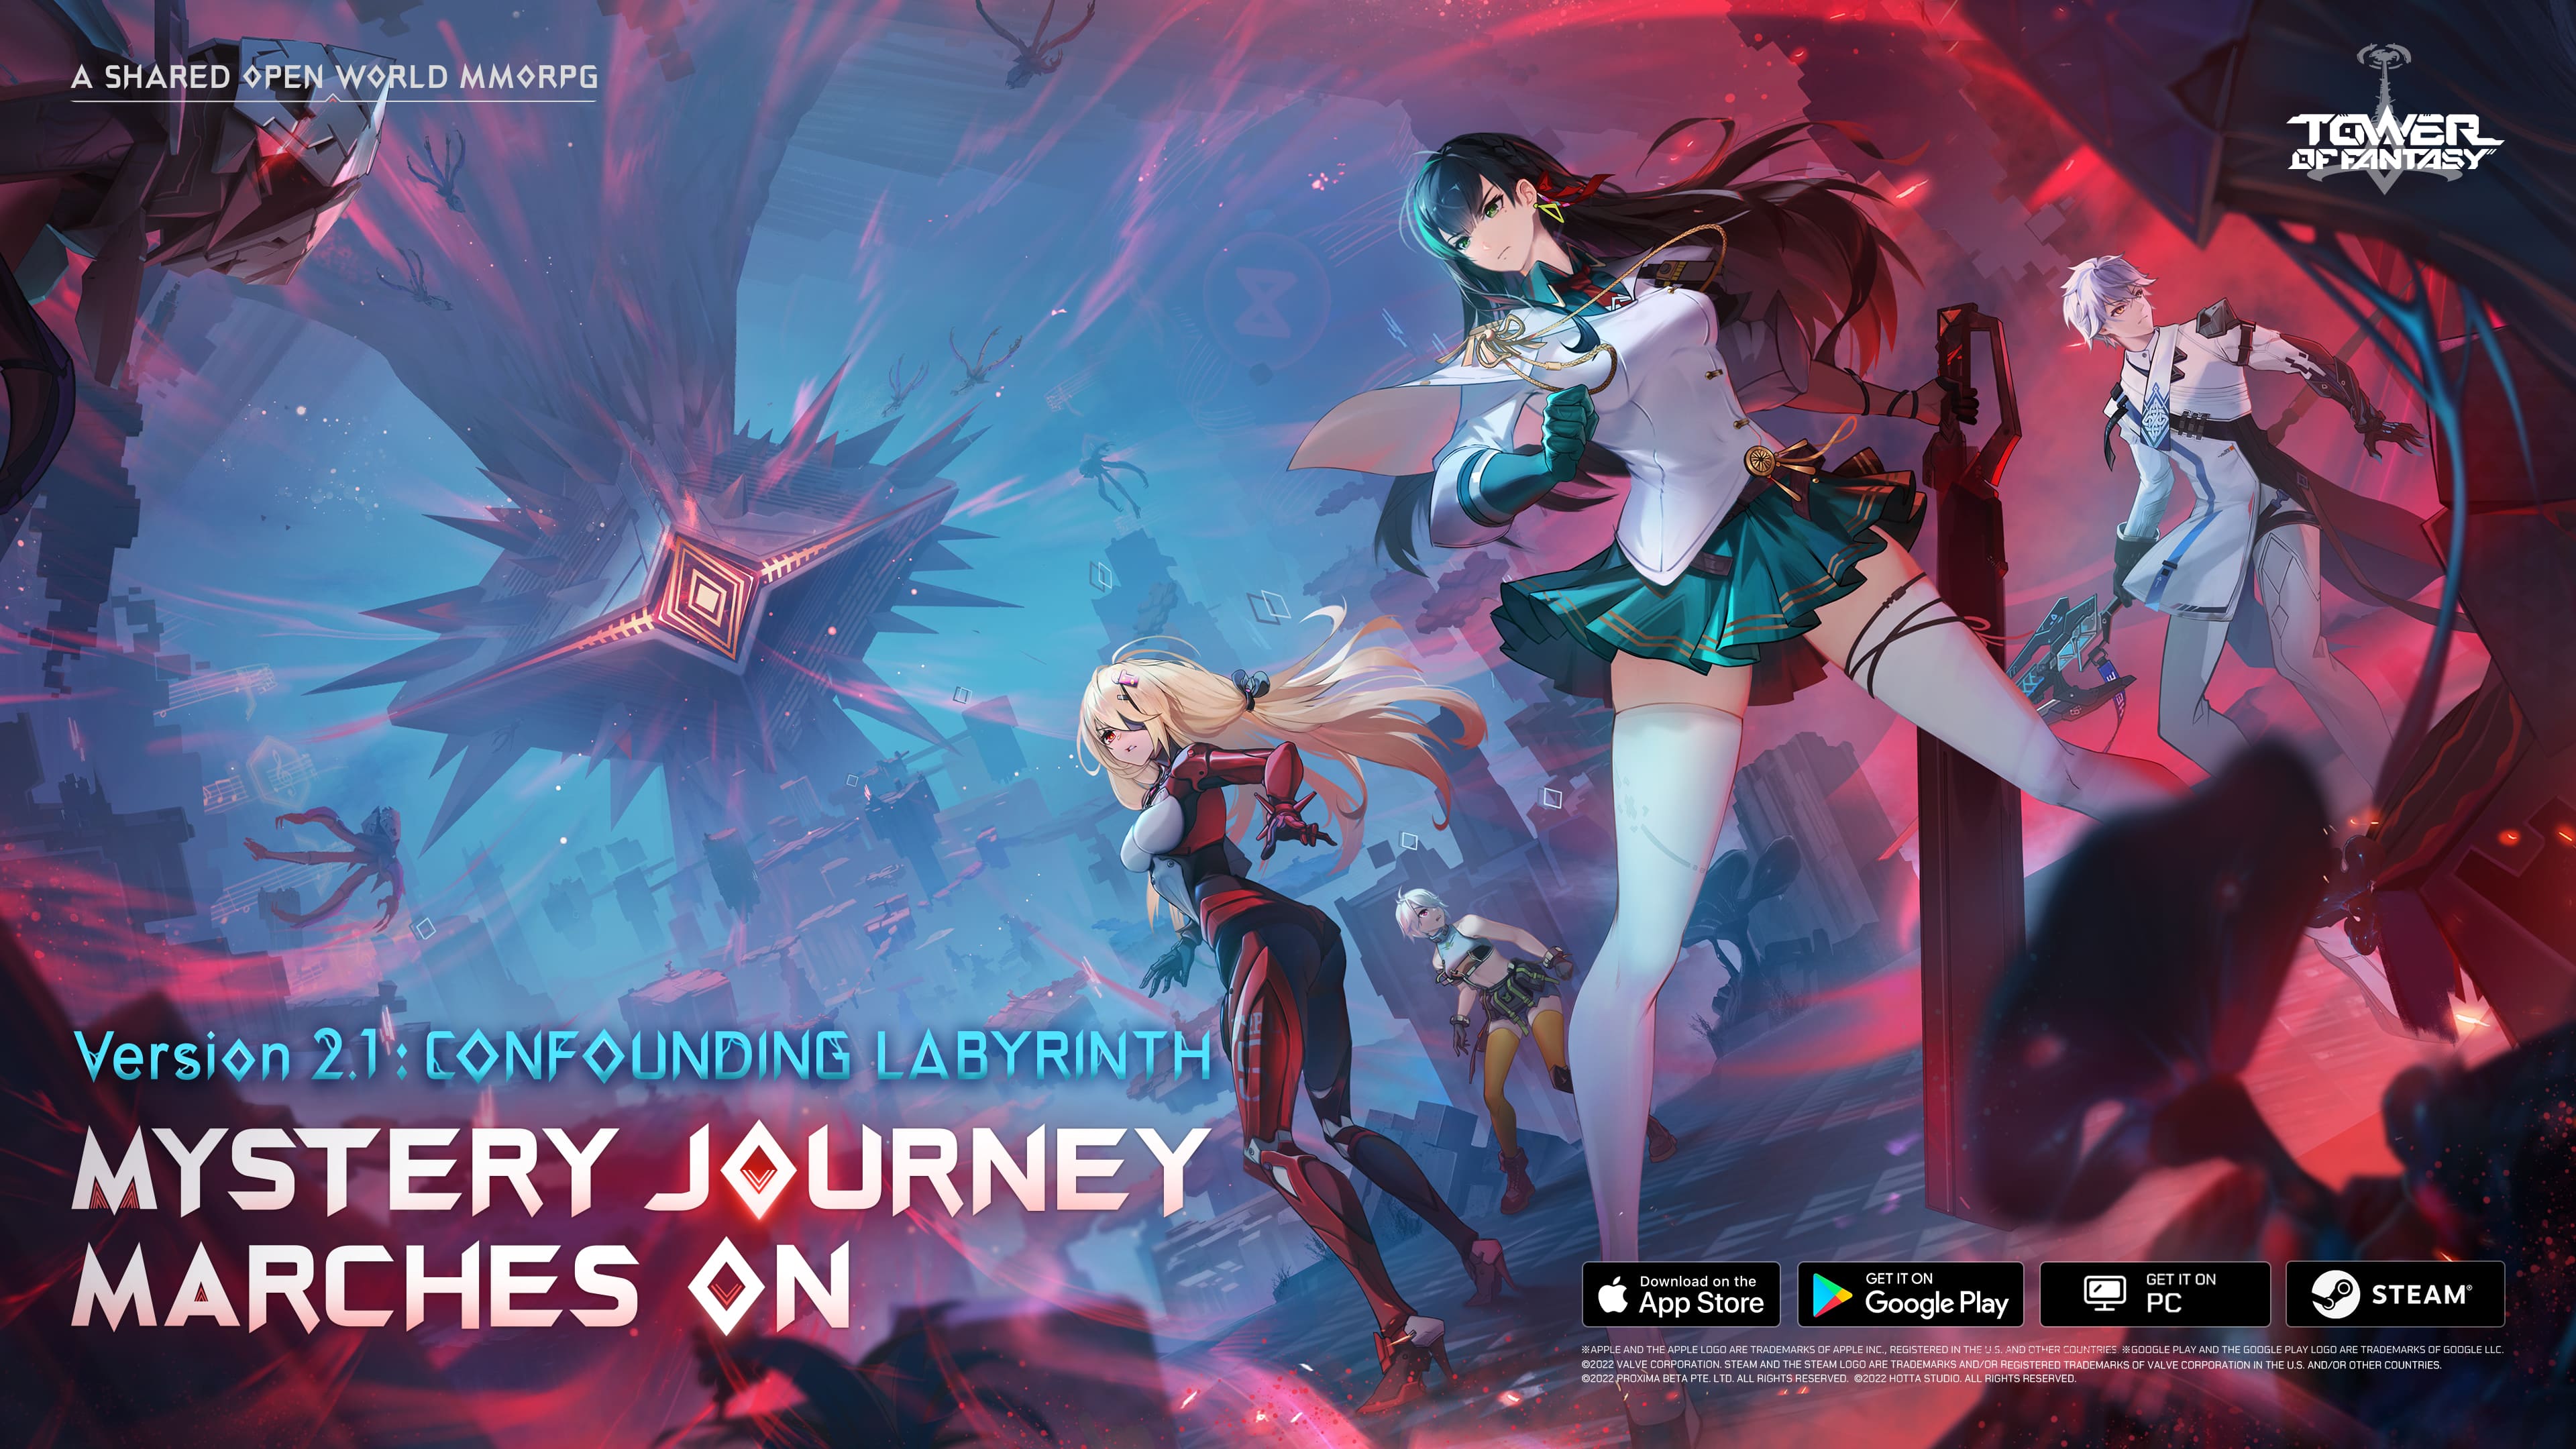 Tower of Fantasy Version 2.1 Confounding Labyrinth update arrives this  November - MEmu Blog